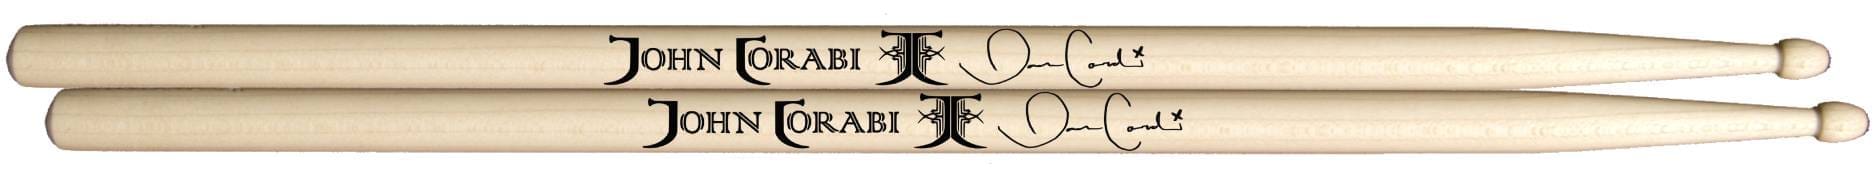 A set of personalized John Corabi drumsticks